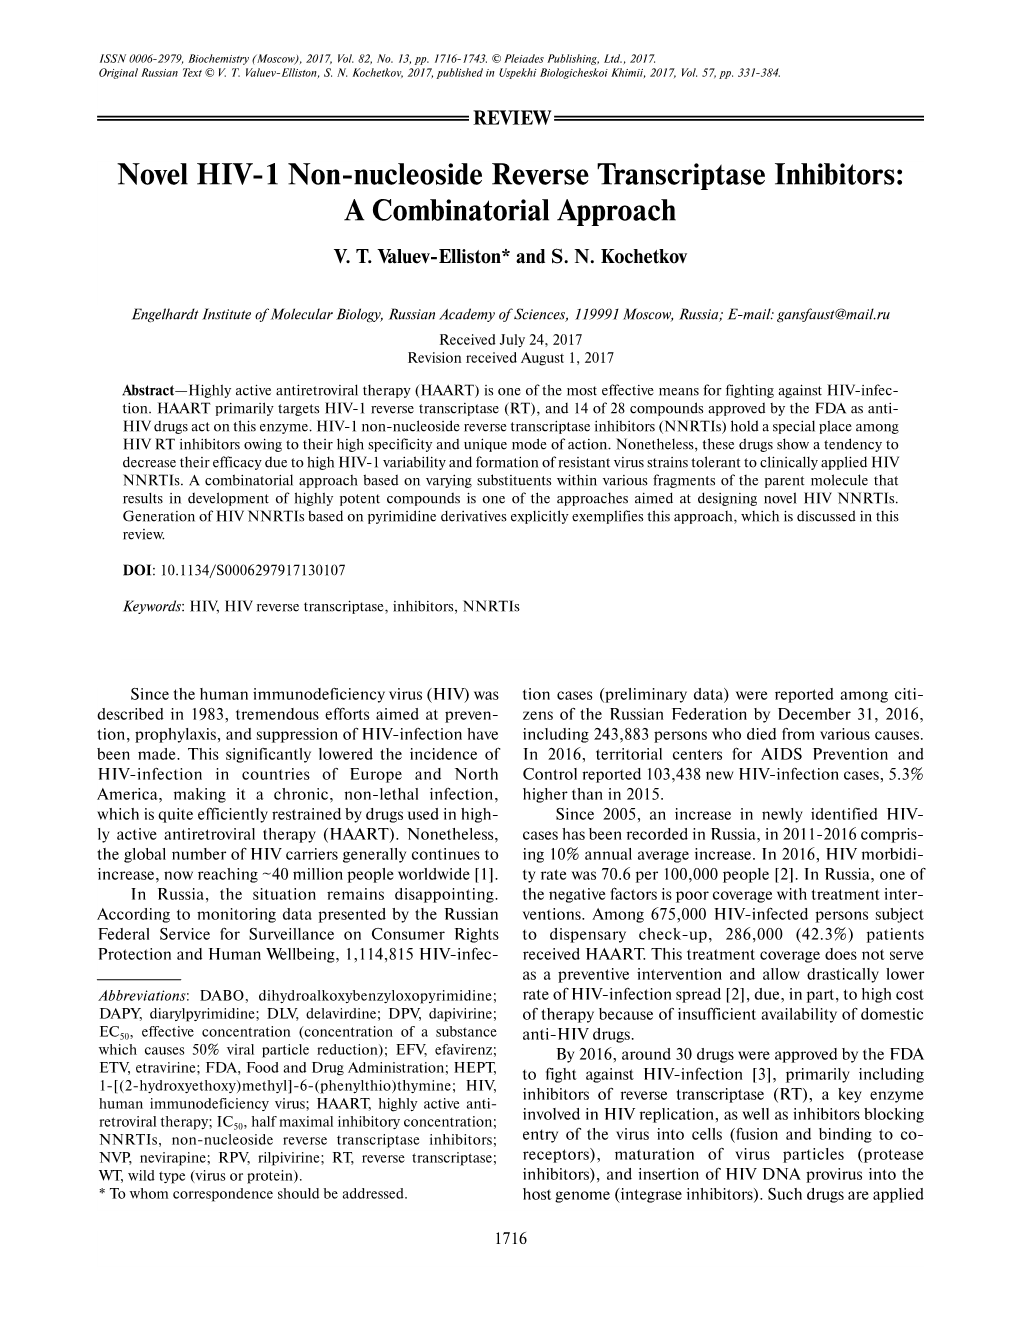 Novel HIV-1 Non-Nucleoside Reverse Transcriptase Inhibitors: a Combinatorial Approach